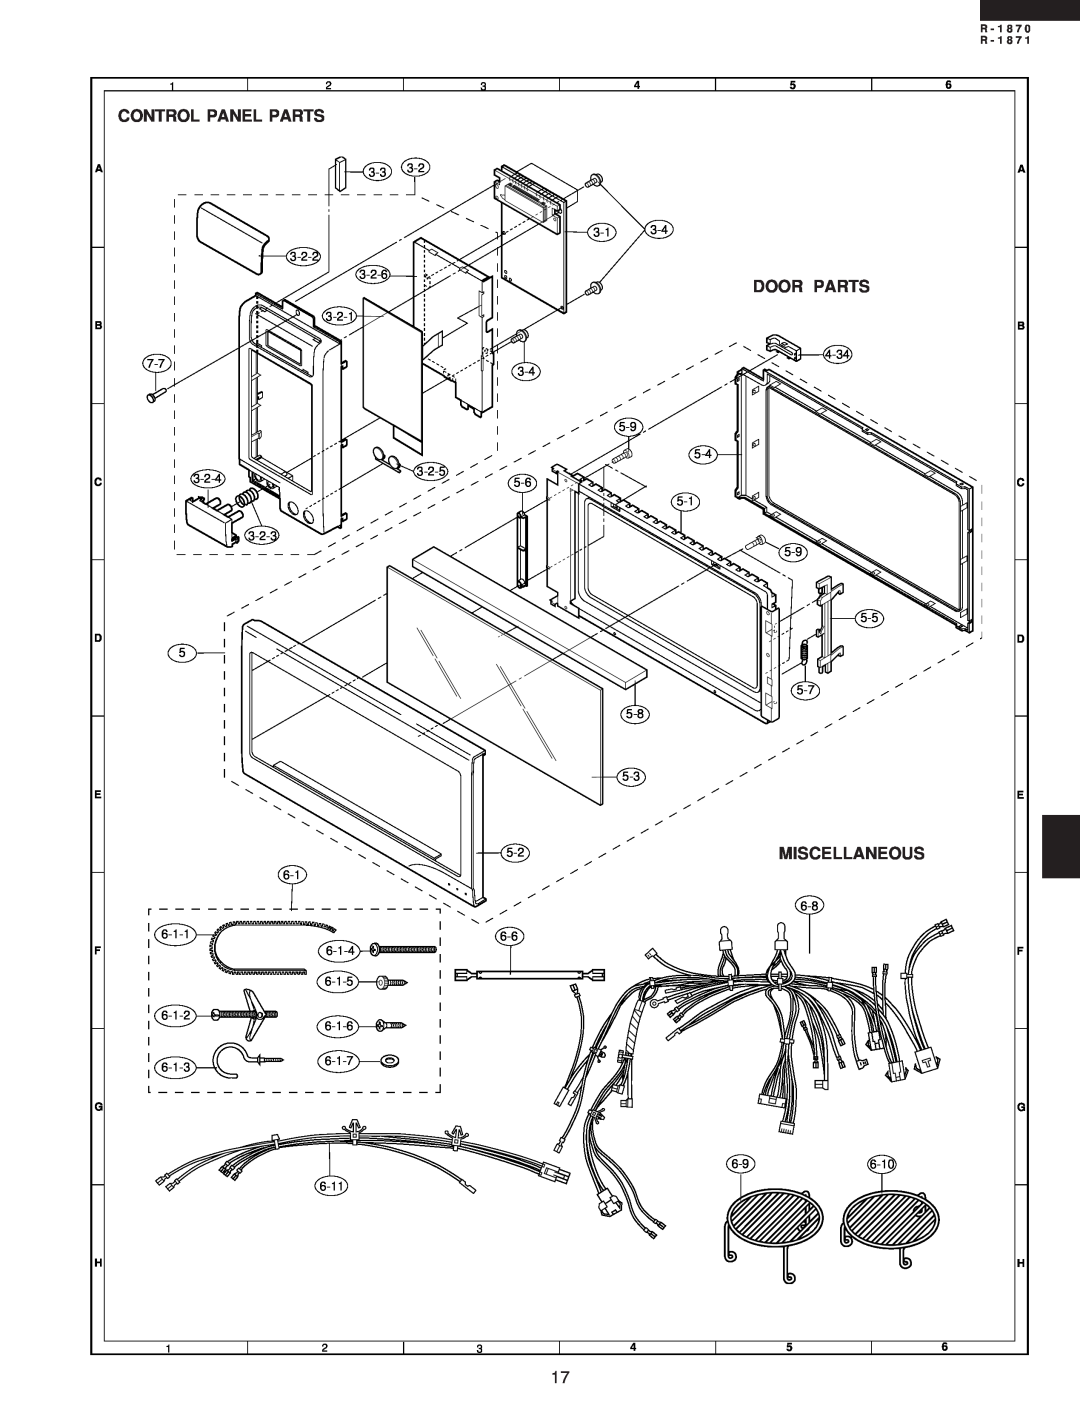 Sharp R-1870 service manual Control Panel Parts, Door Parts, Miscellaneous, R - 1 8 7 